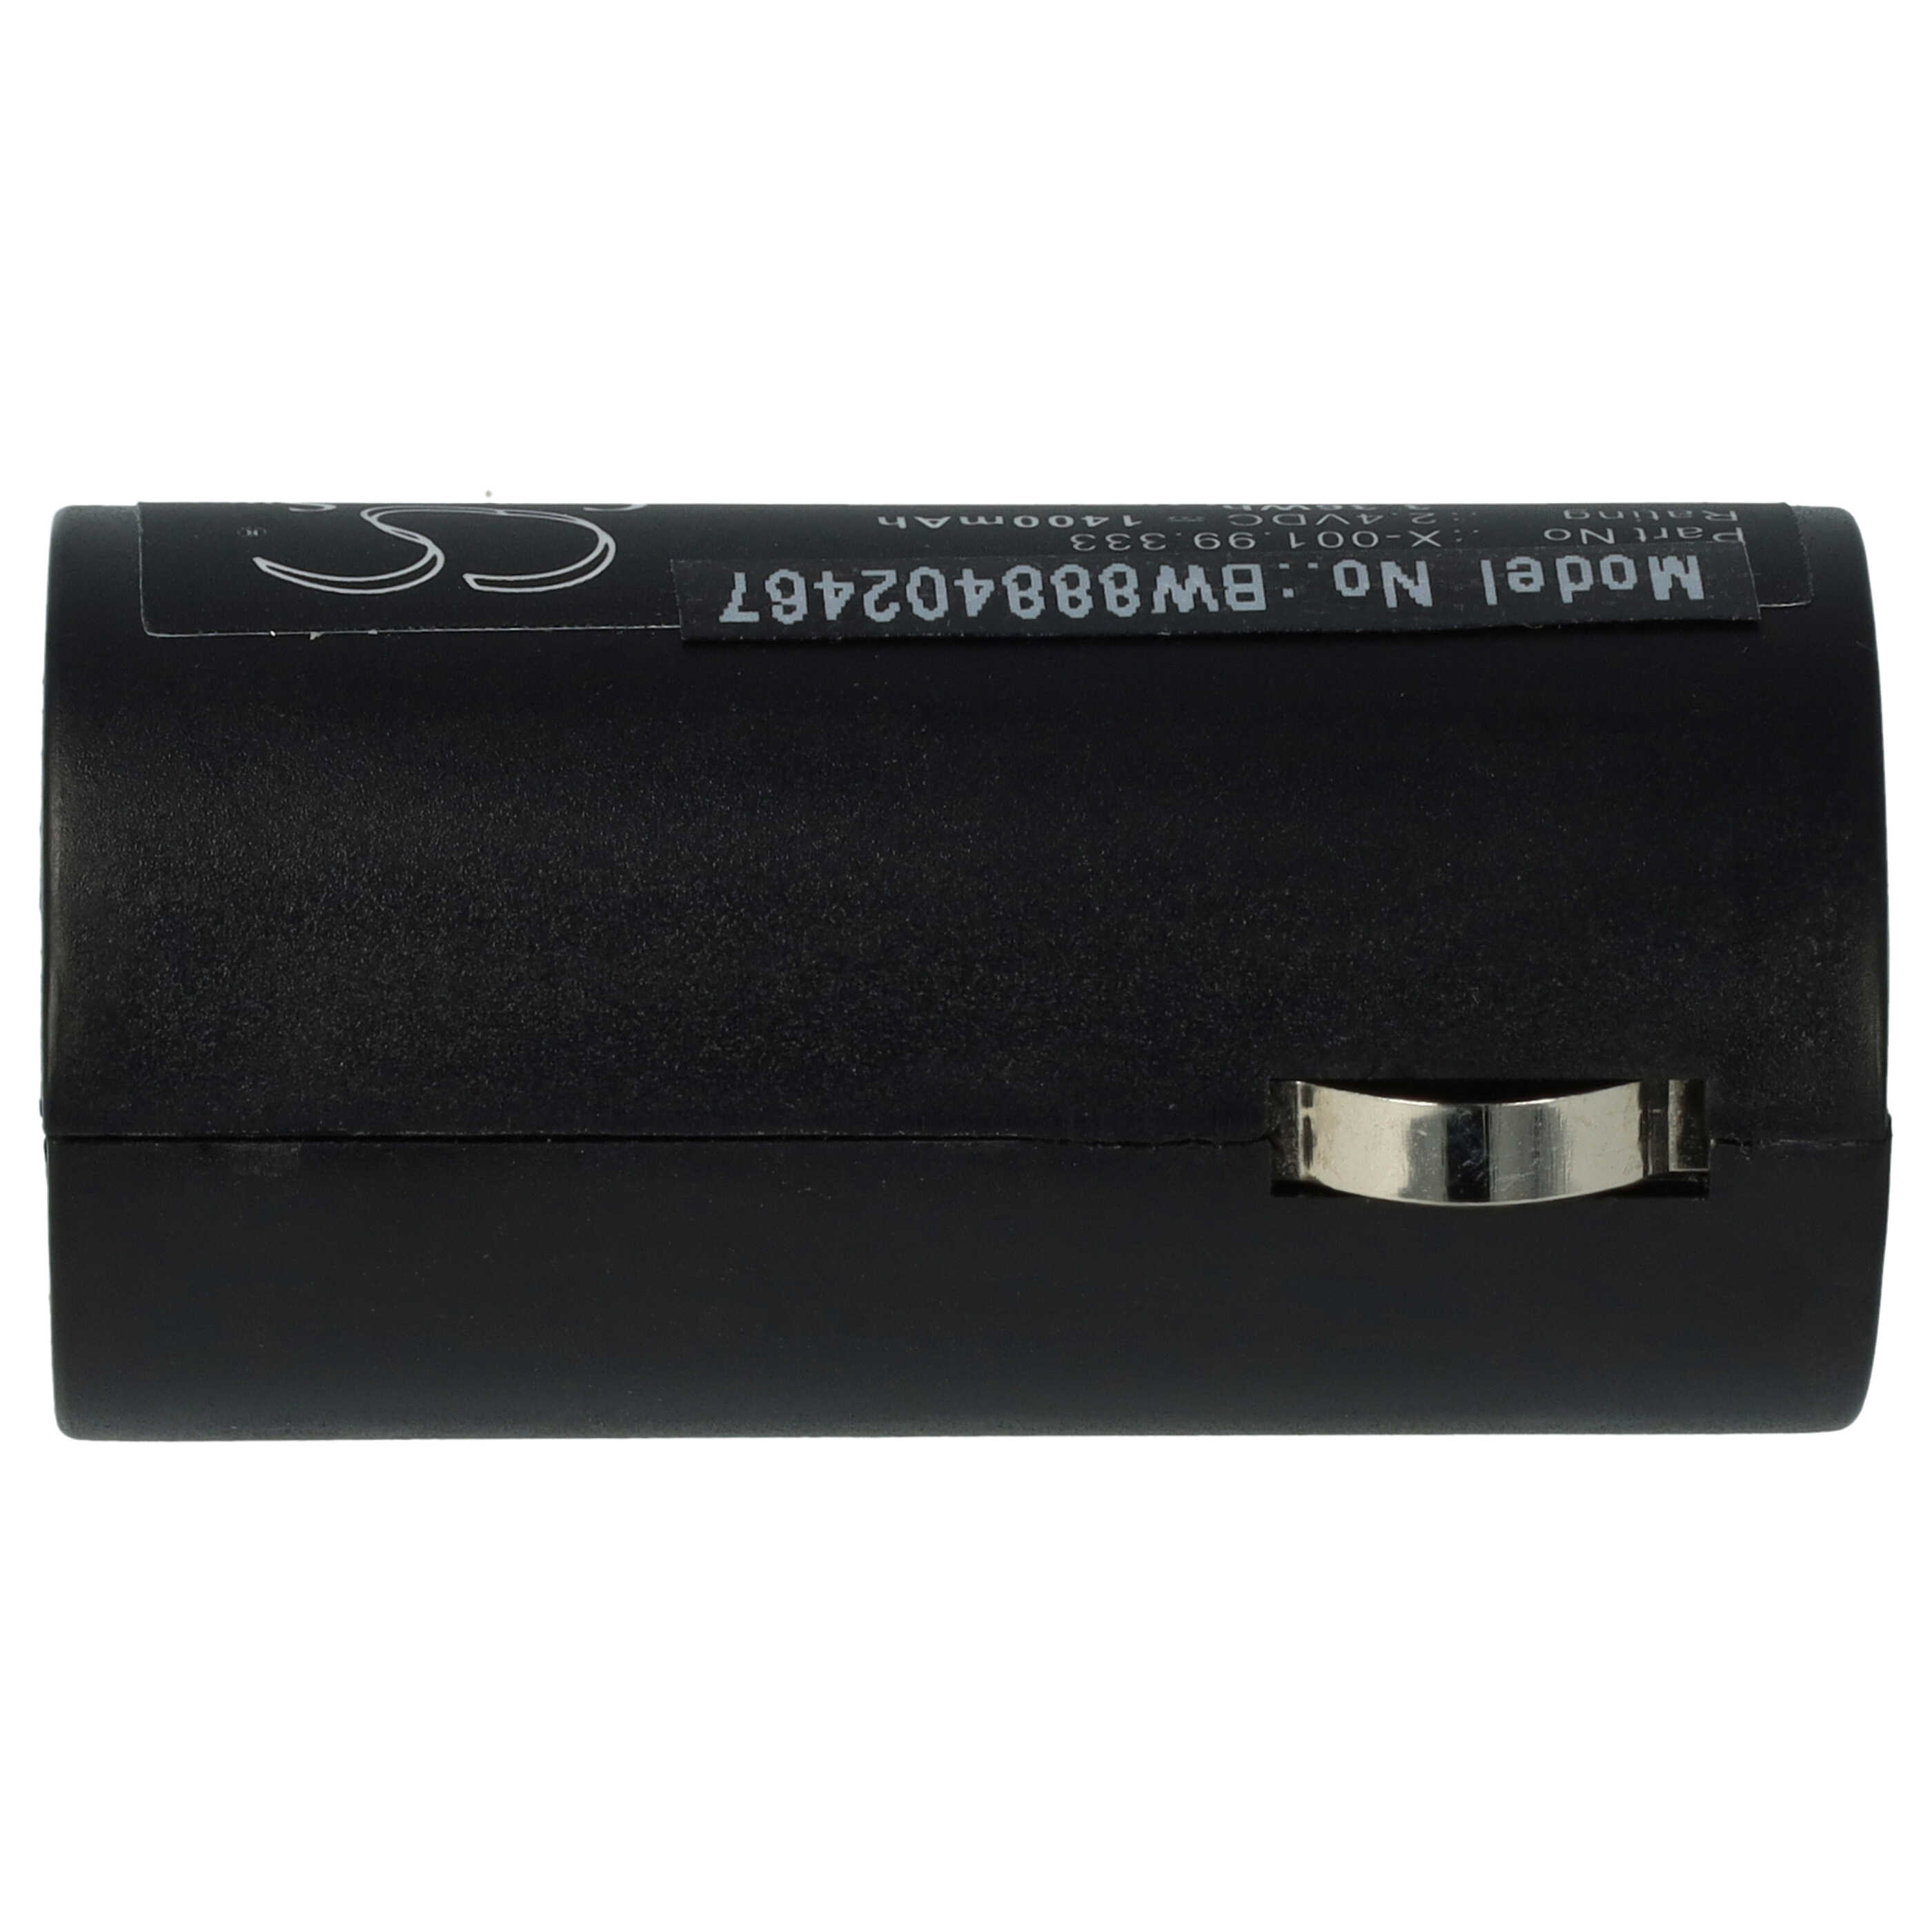 Batería reemplaza Heine X-001.99.333 para tecnología médica - 1400 mAh, 2,4 V